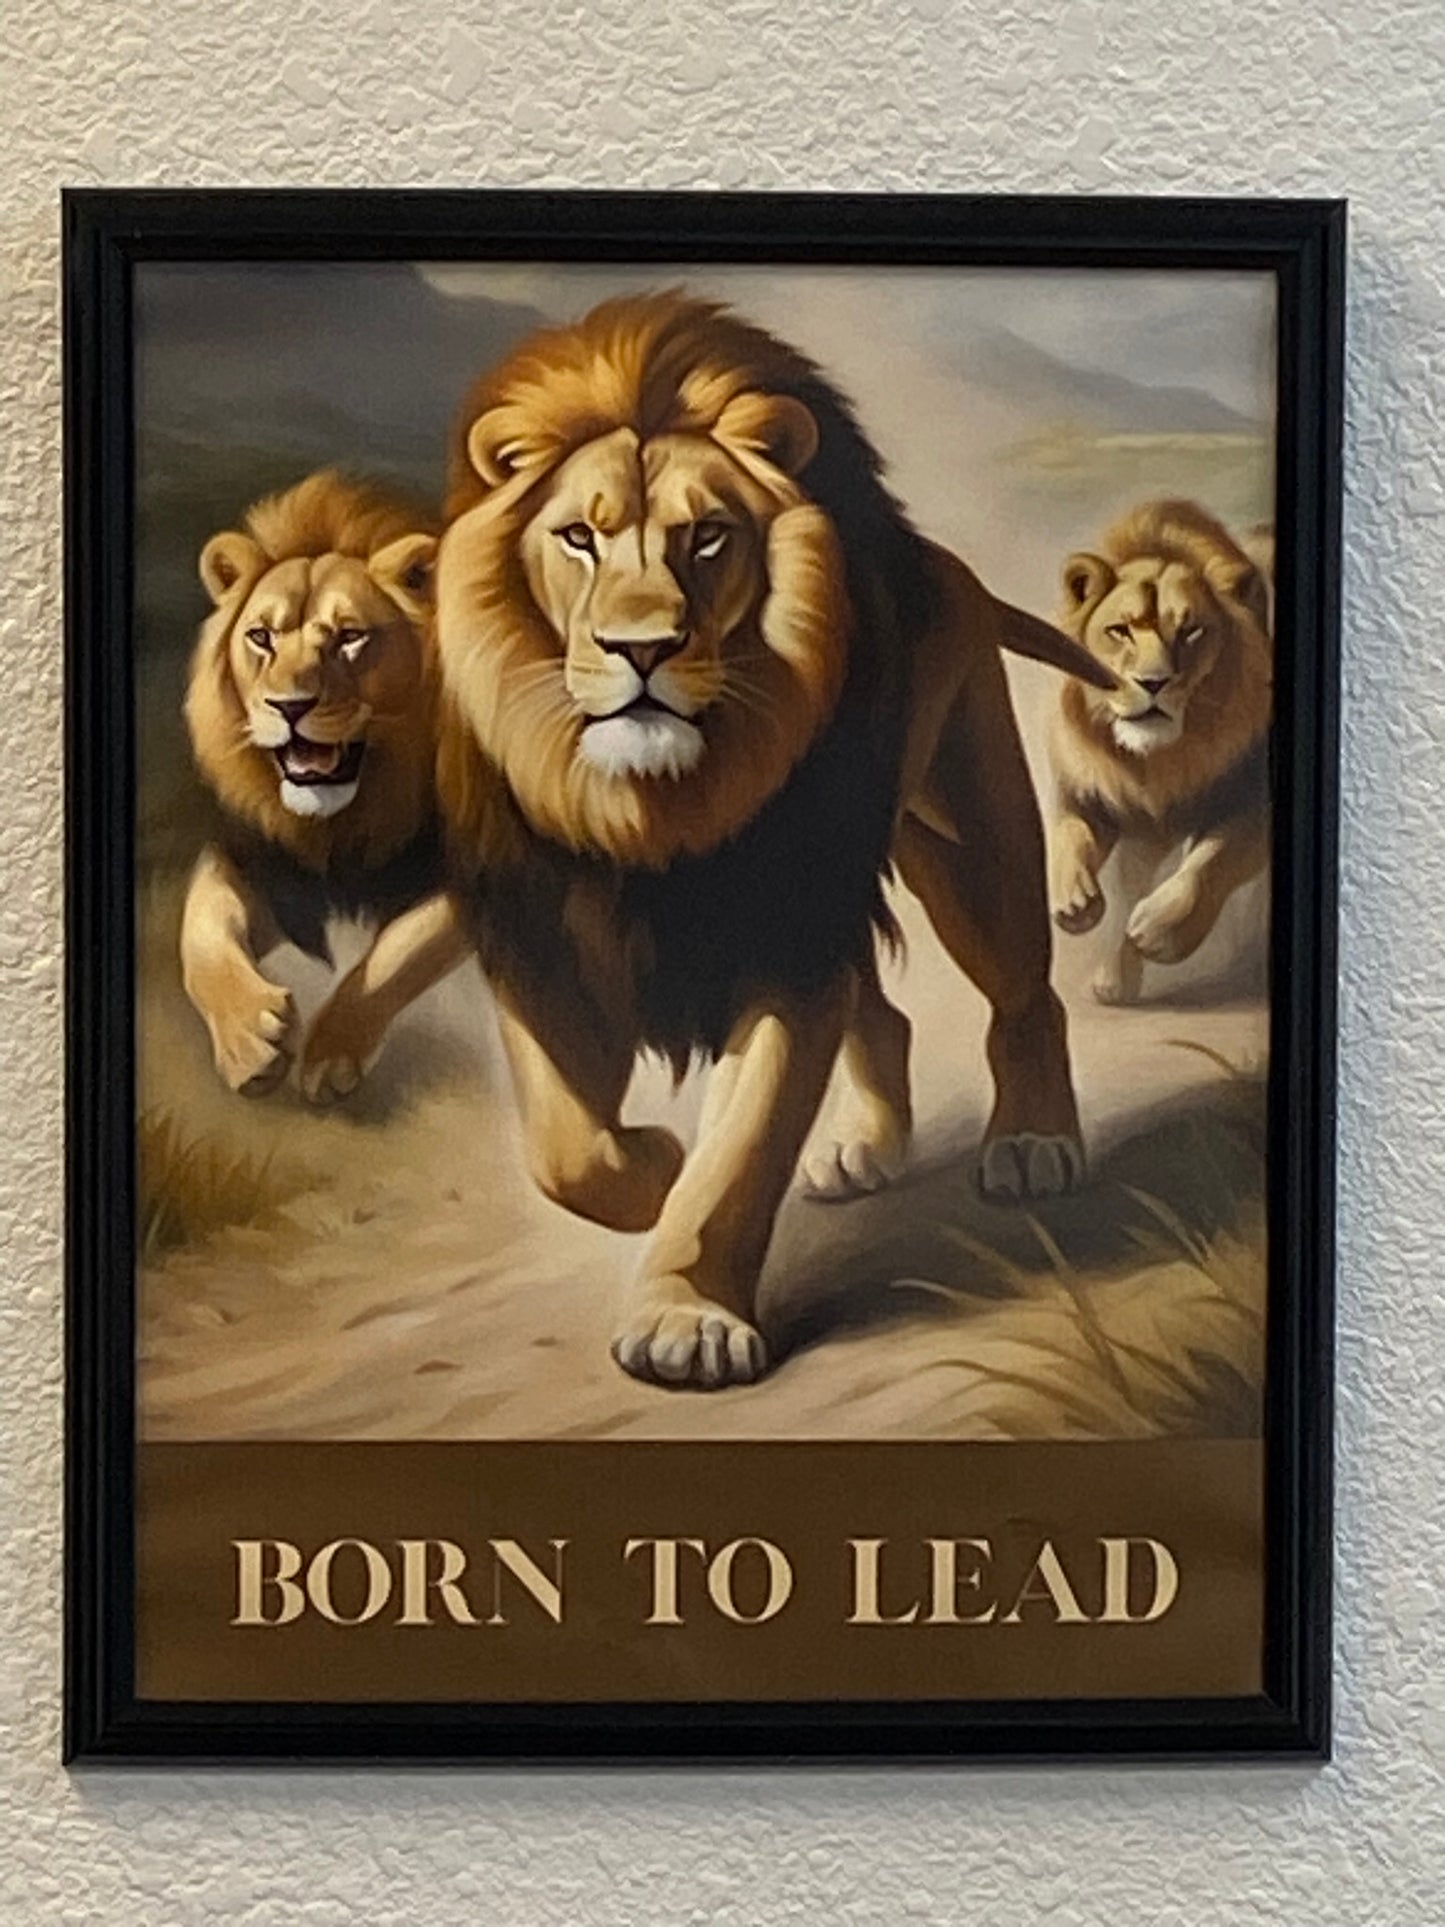 Born To Lead 16x20 Black Framed Motivational Digital Art